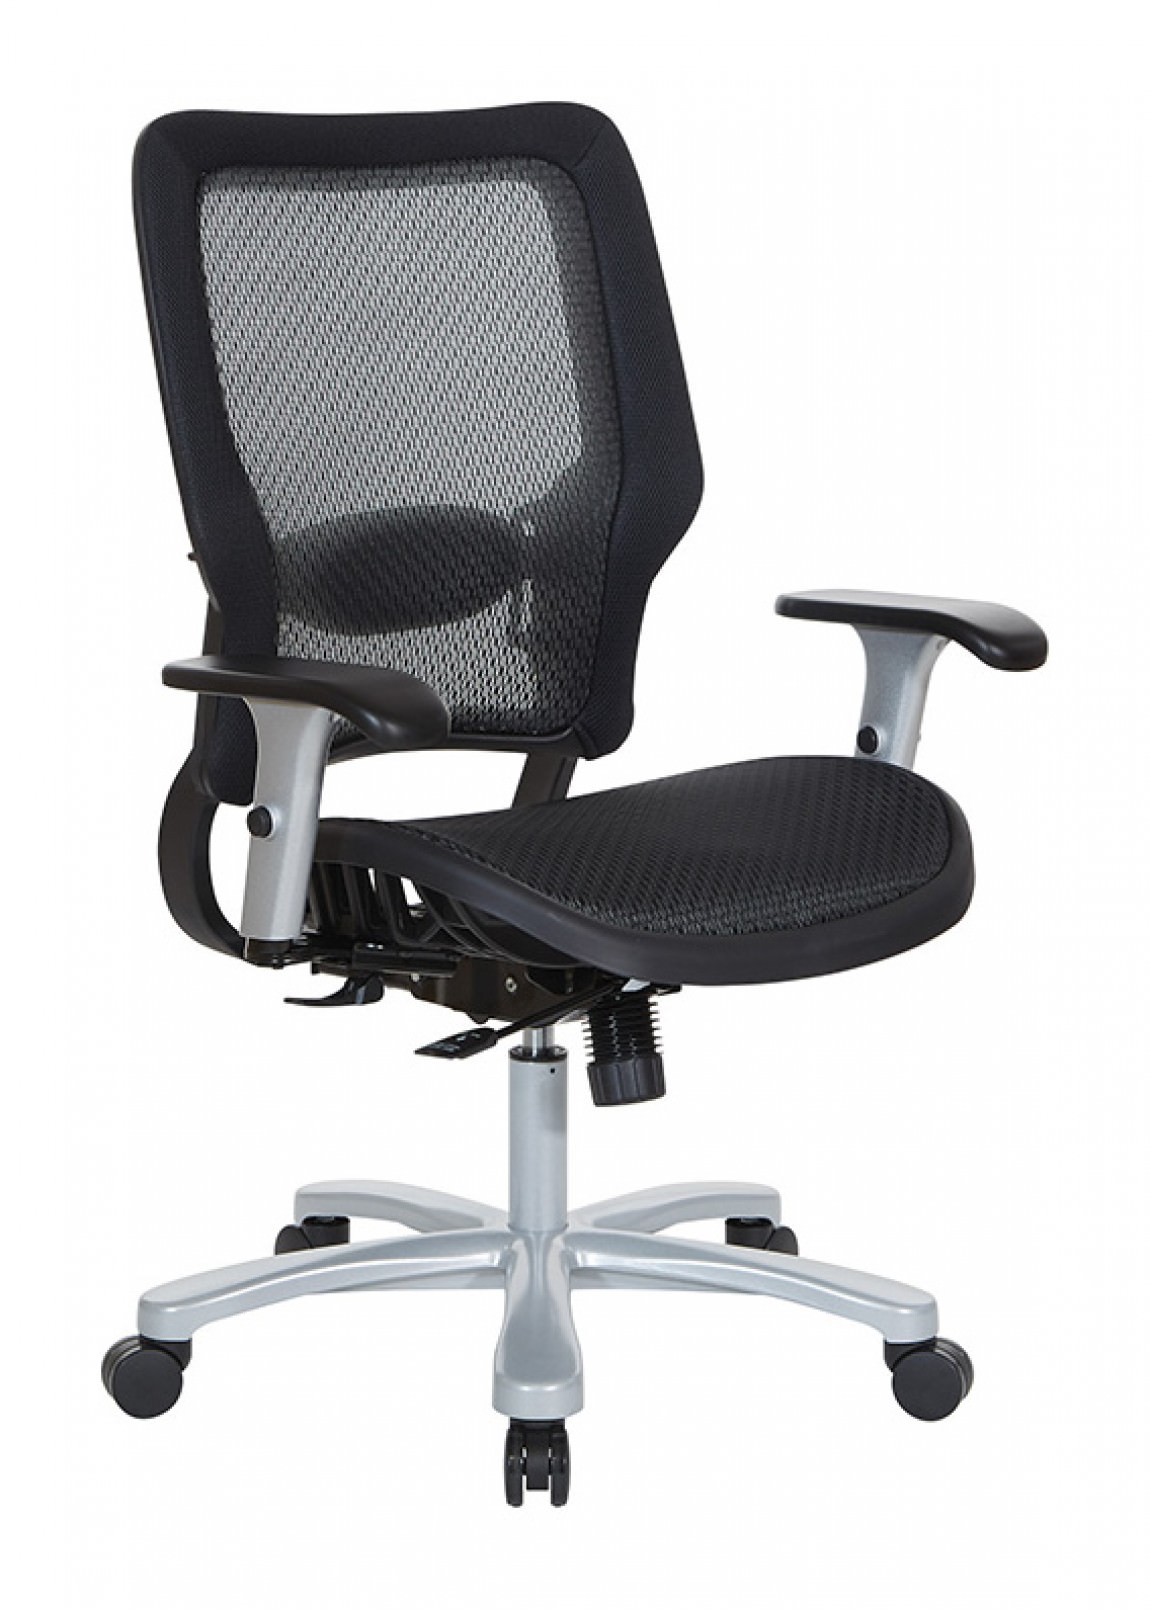 https://madisonliquidators.com/images/p/1150/25269-heavy-duty-office-chair-1.jpg